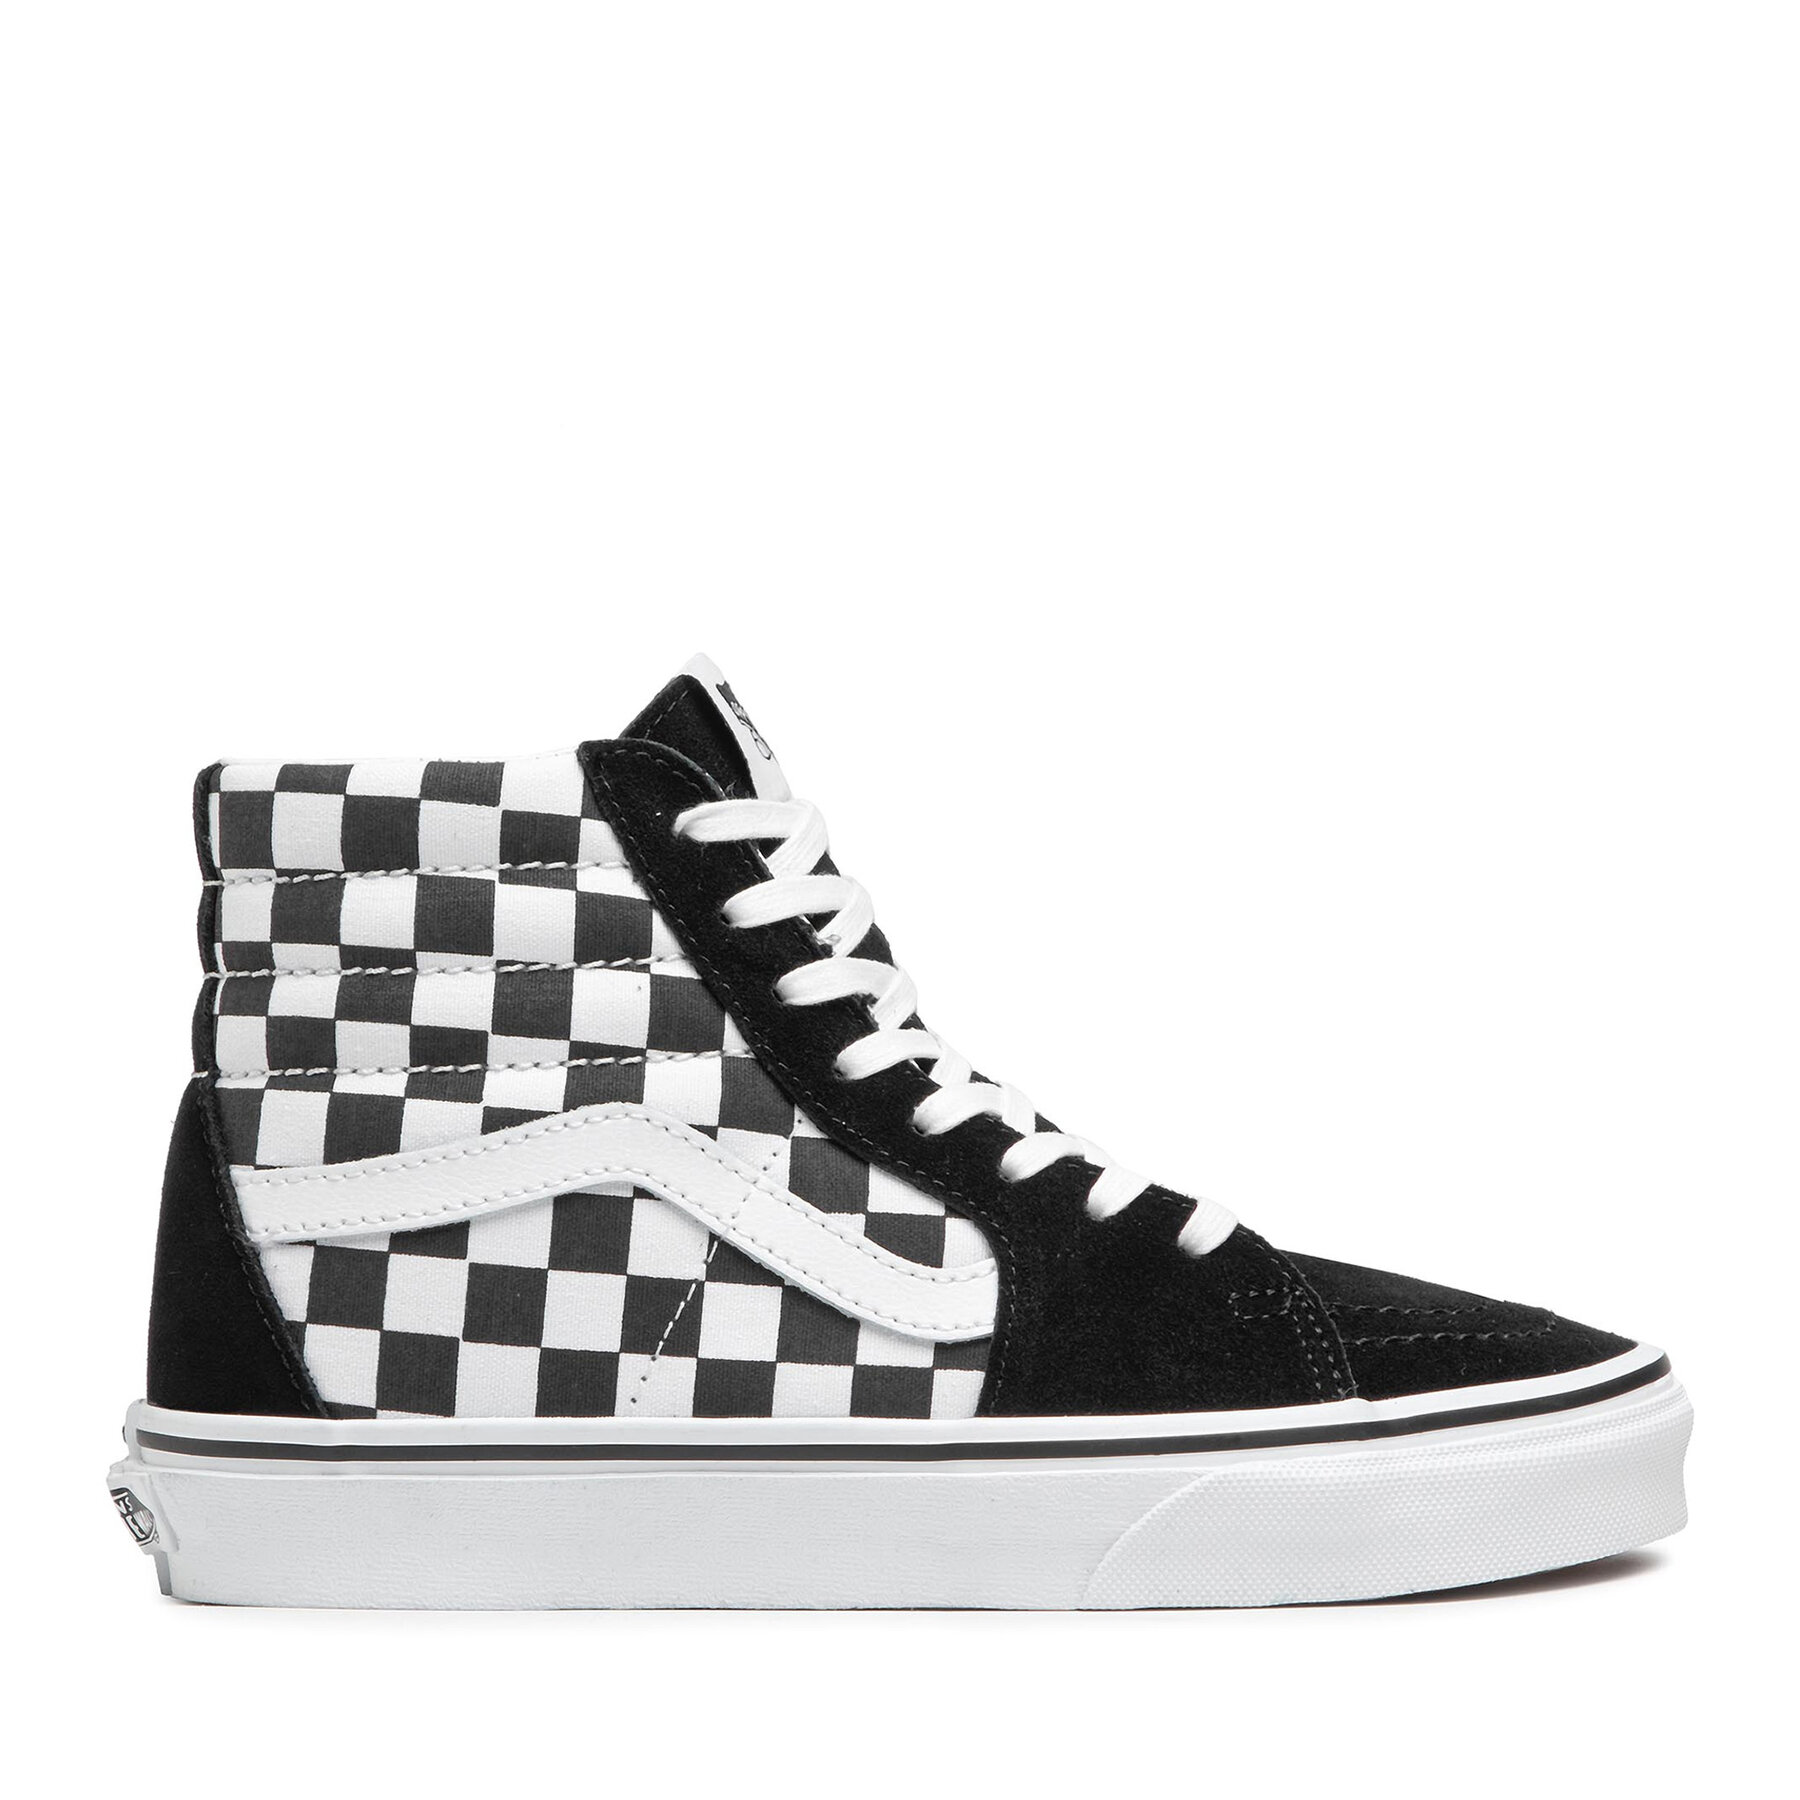 Sneakers Vans Sk8-Hi VN0A32QGHRK1 (Checkerboard) Blk/Tr Wht von Vans